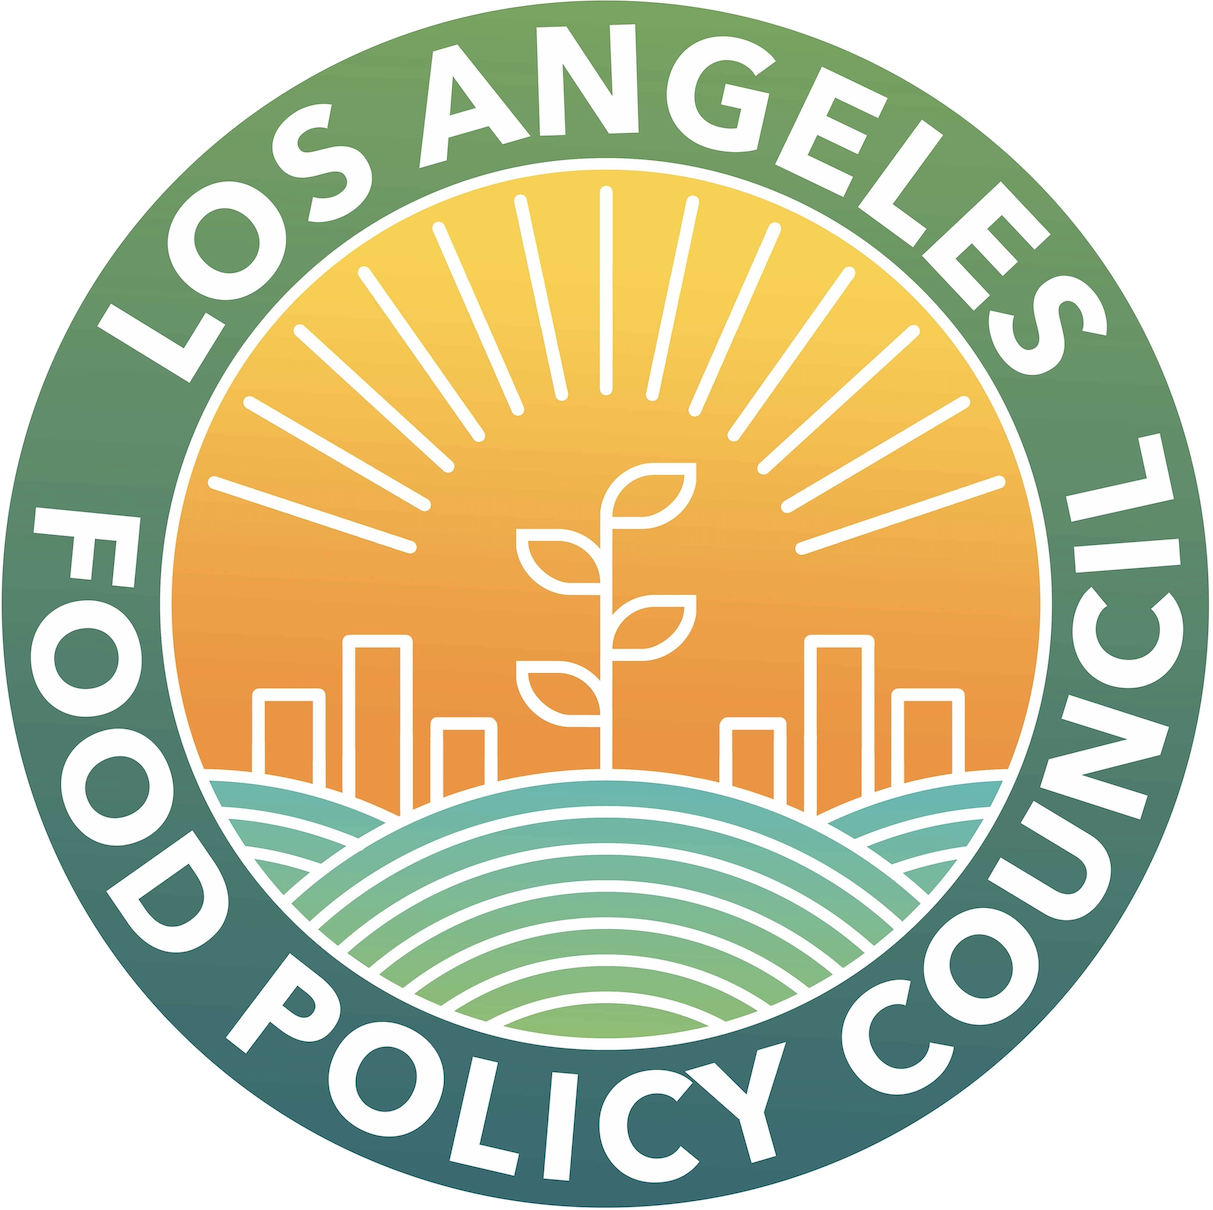 Los Angeles Food Policy Council